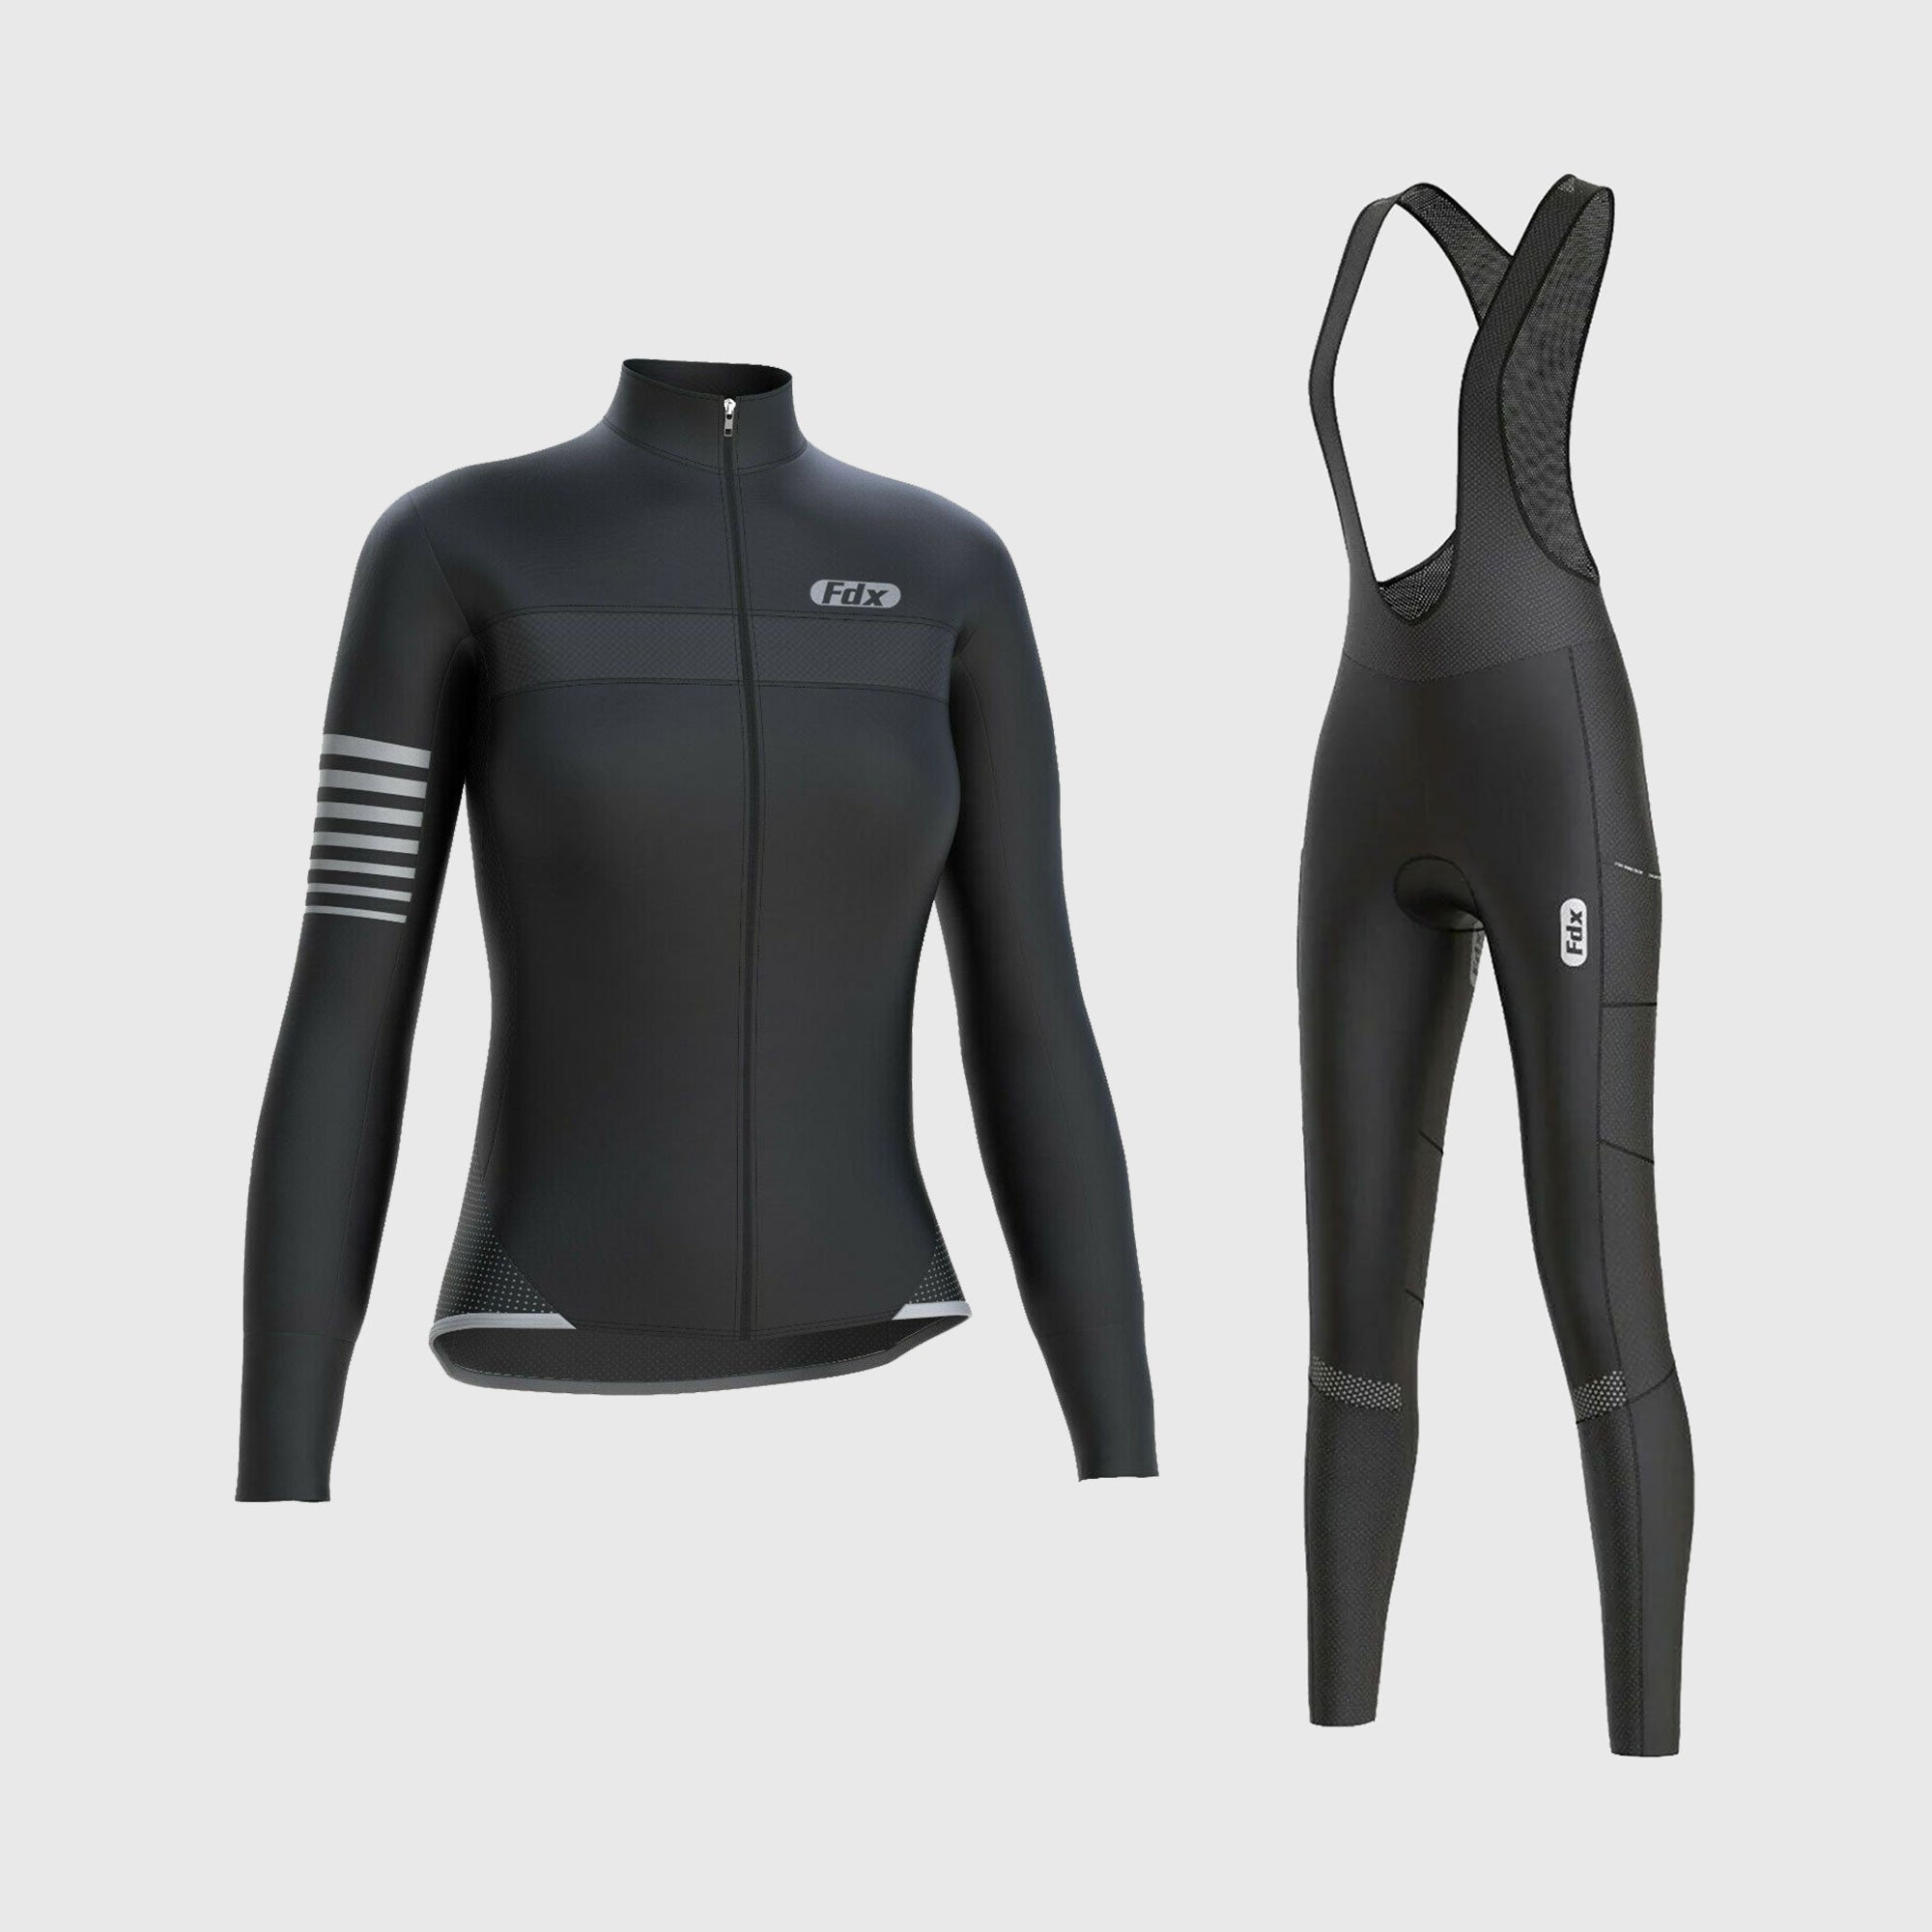 Buy Fdx Women's Sets Long Sleeve Thermal Winter Cycling Jerseys & Bib Tights